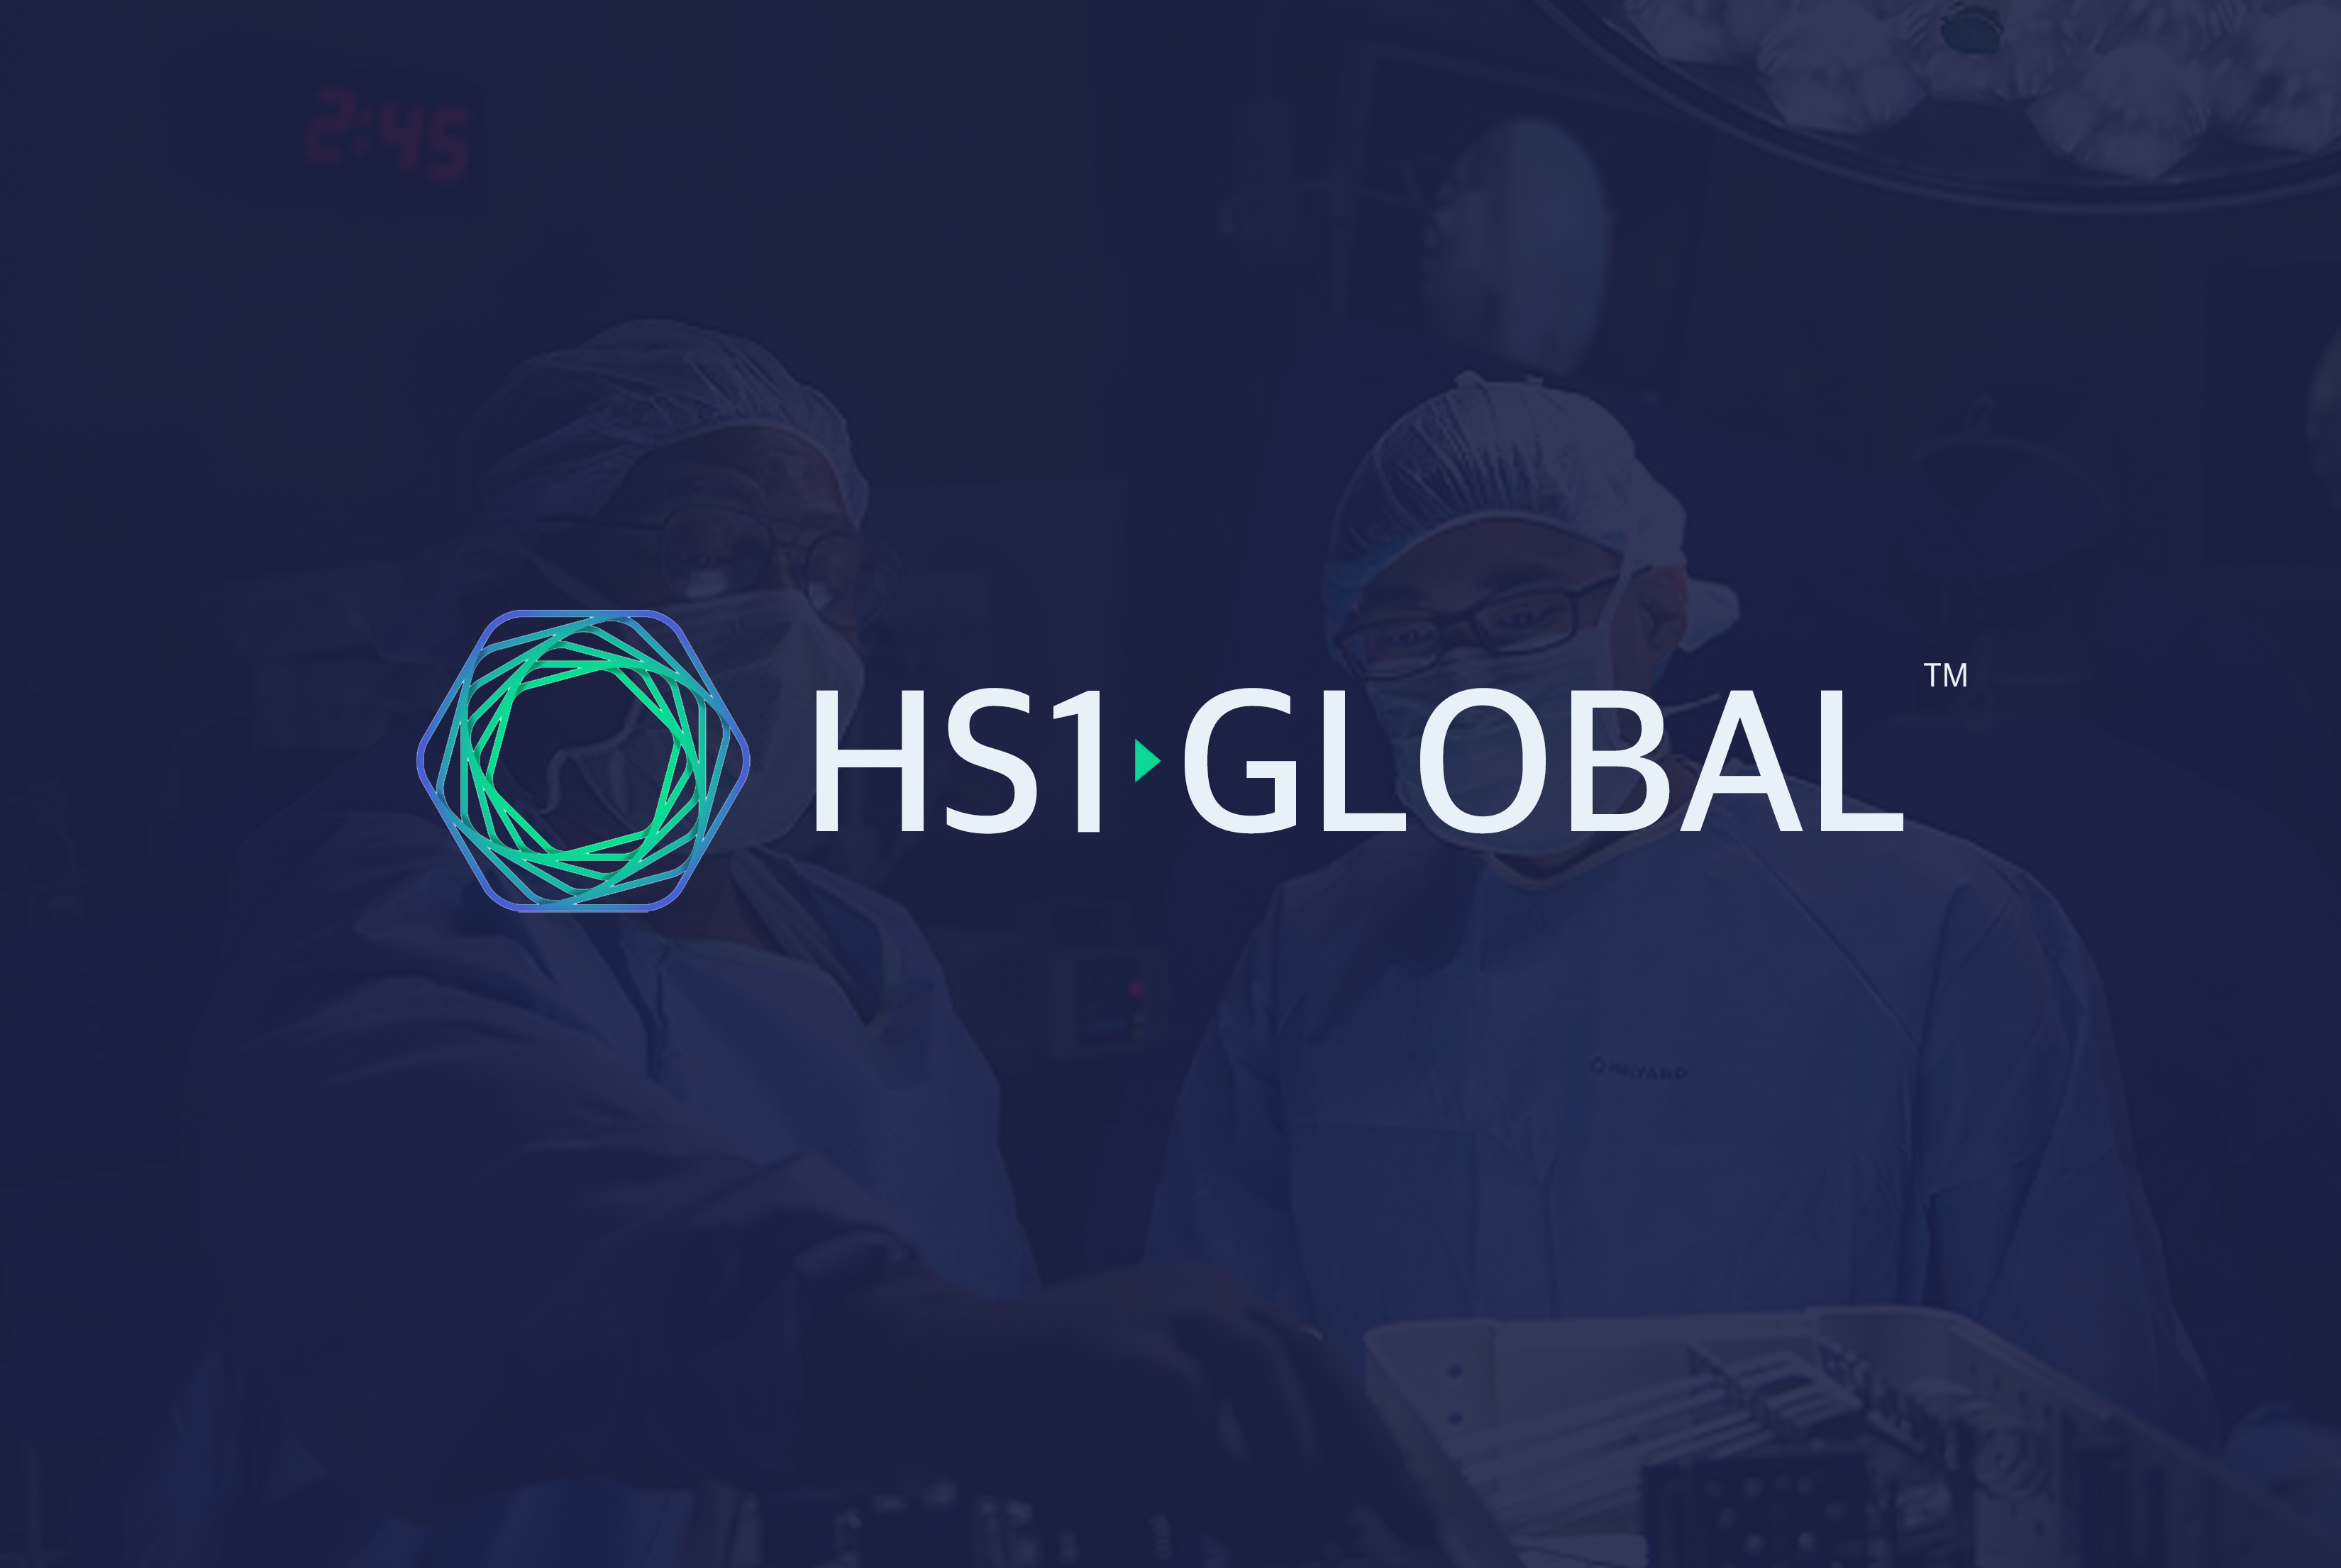 HS1 Global